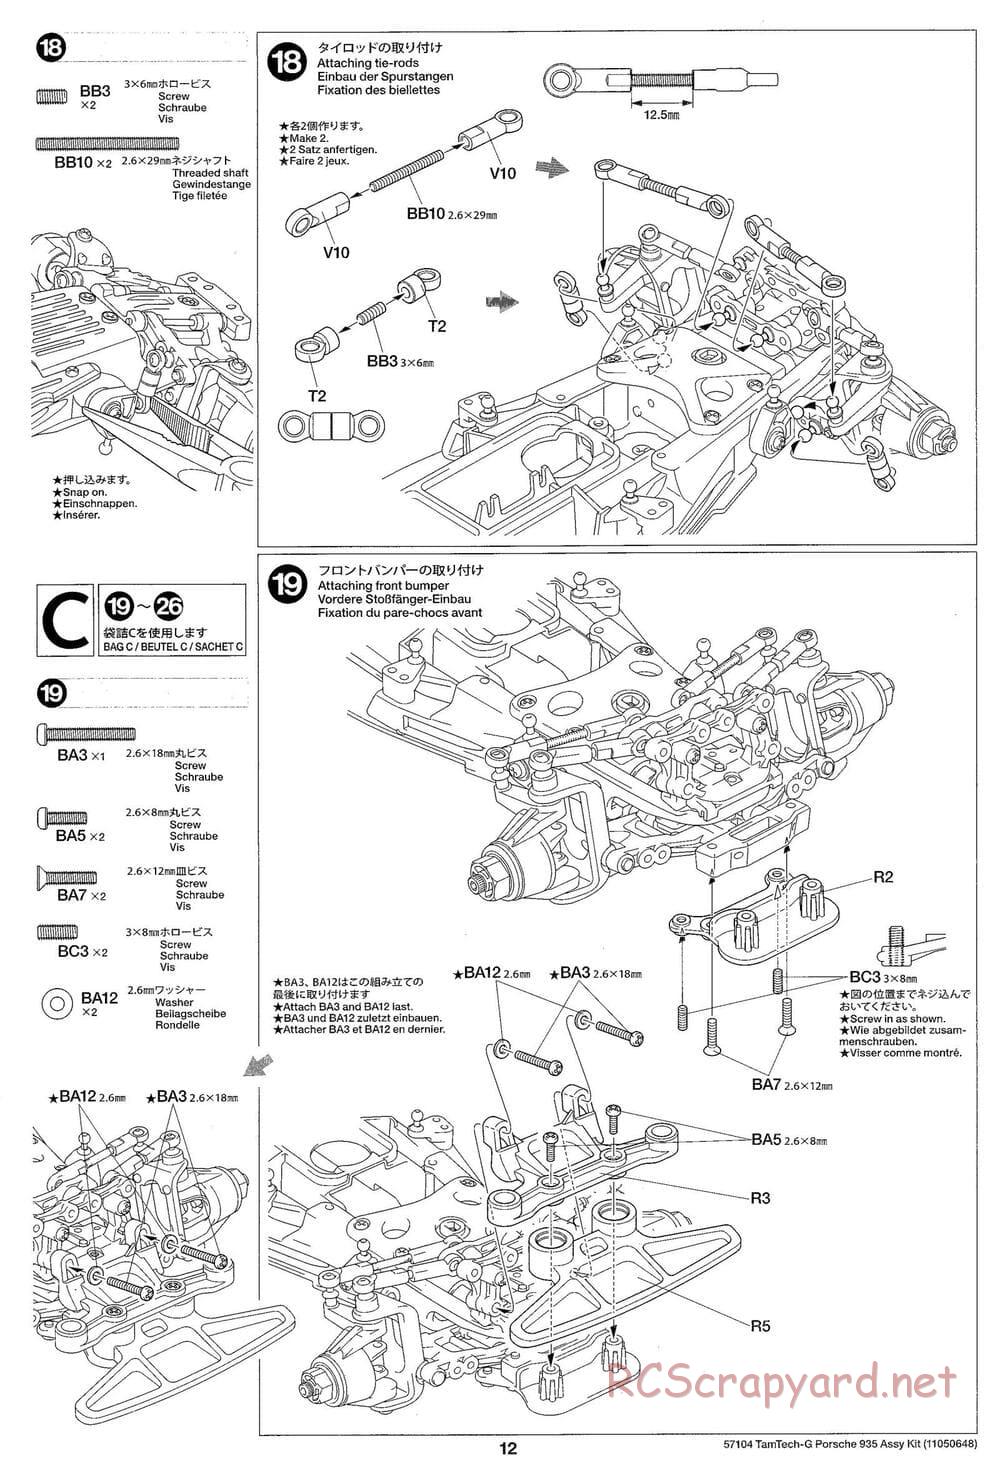 Tamiya - Porsche 935 Martini - GT-01 Chassis - Manual - Page 12